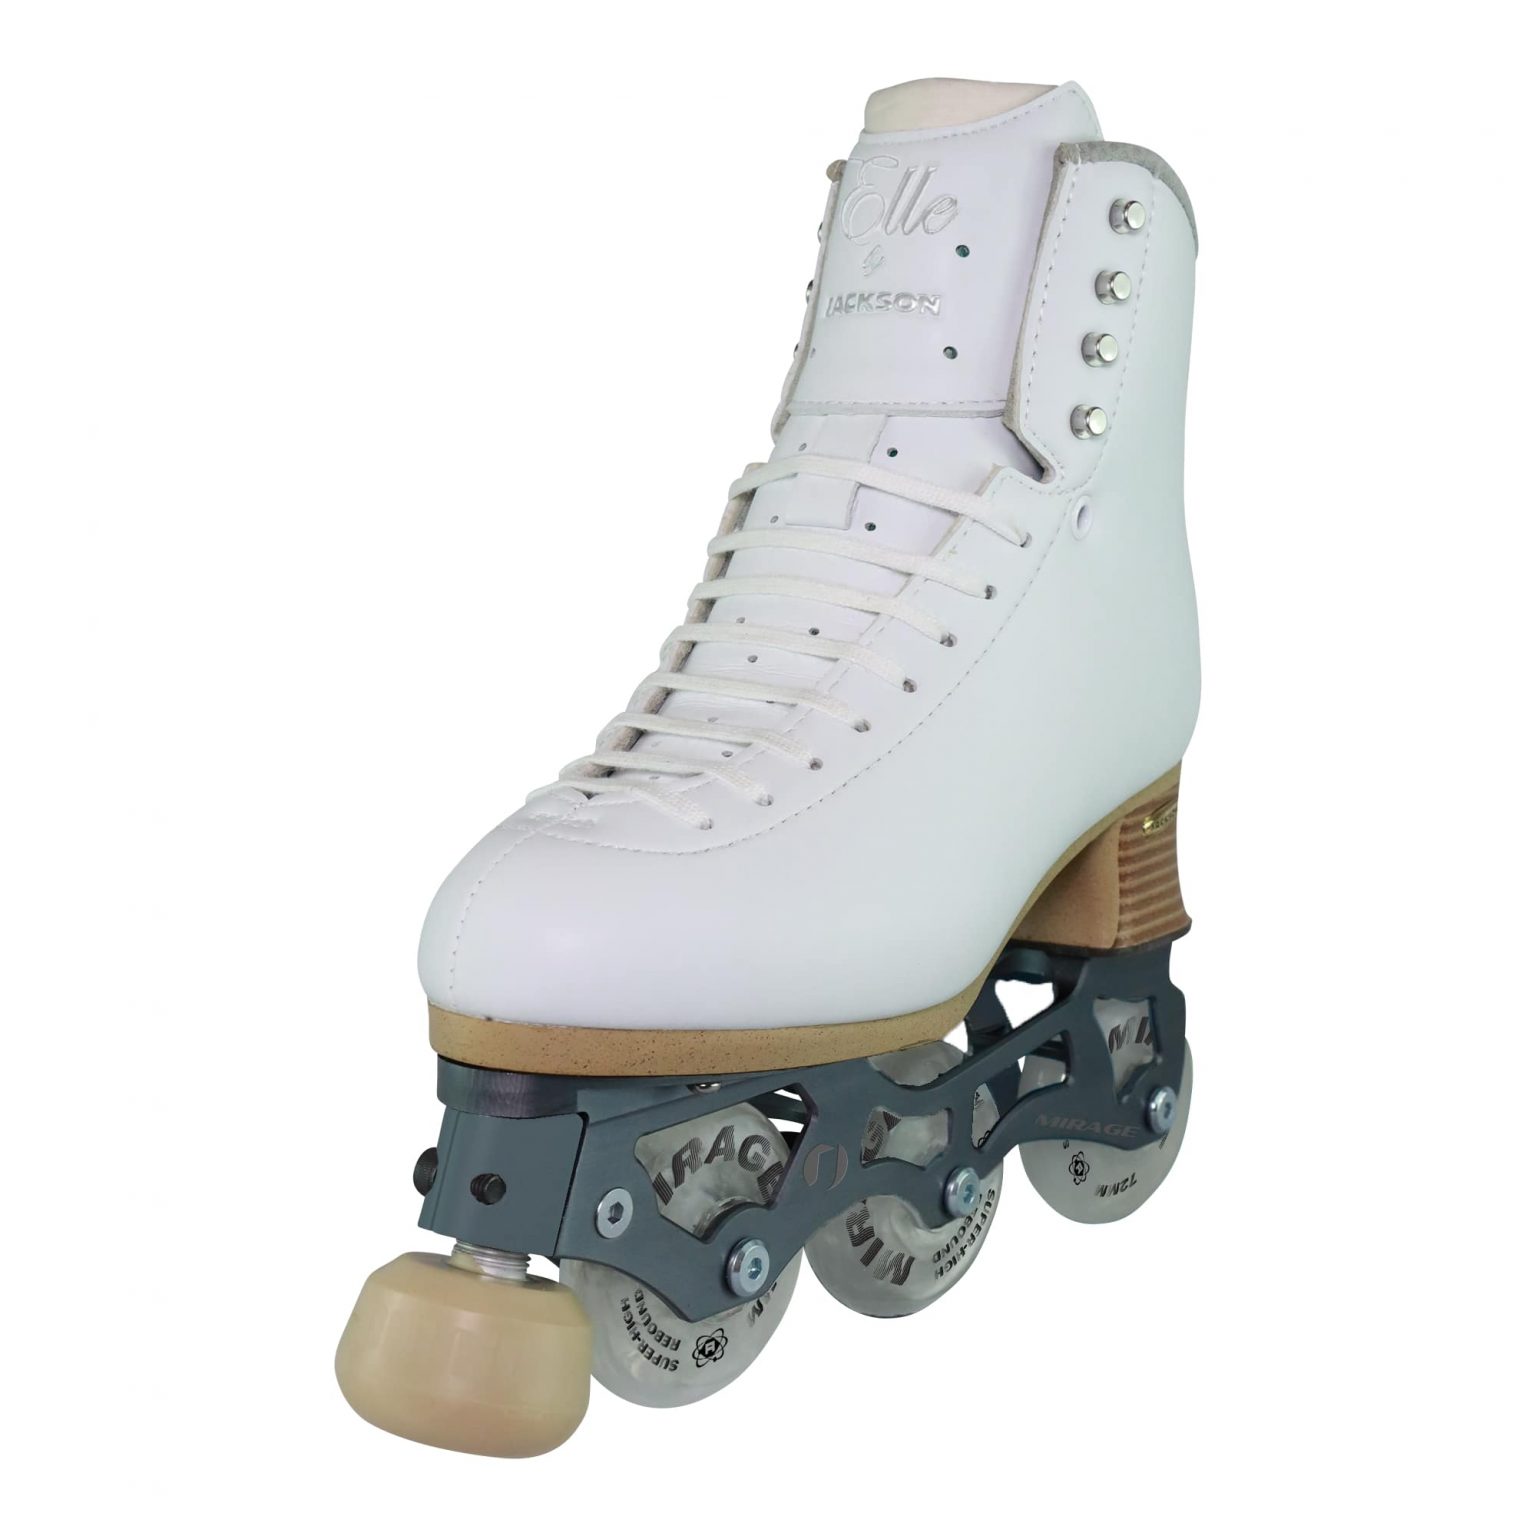 Jackson Elle Inline Skate Package 800 PA800 – Proshop